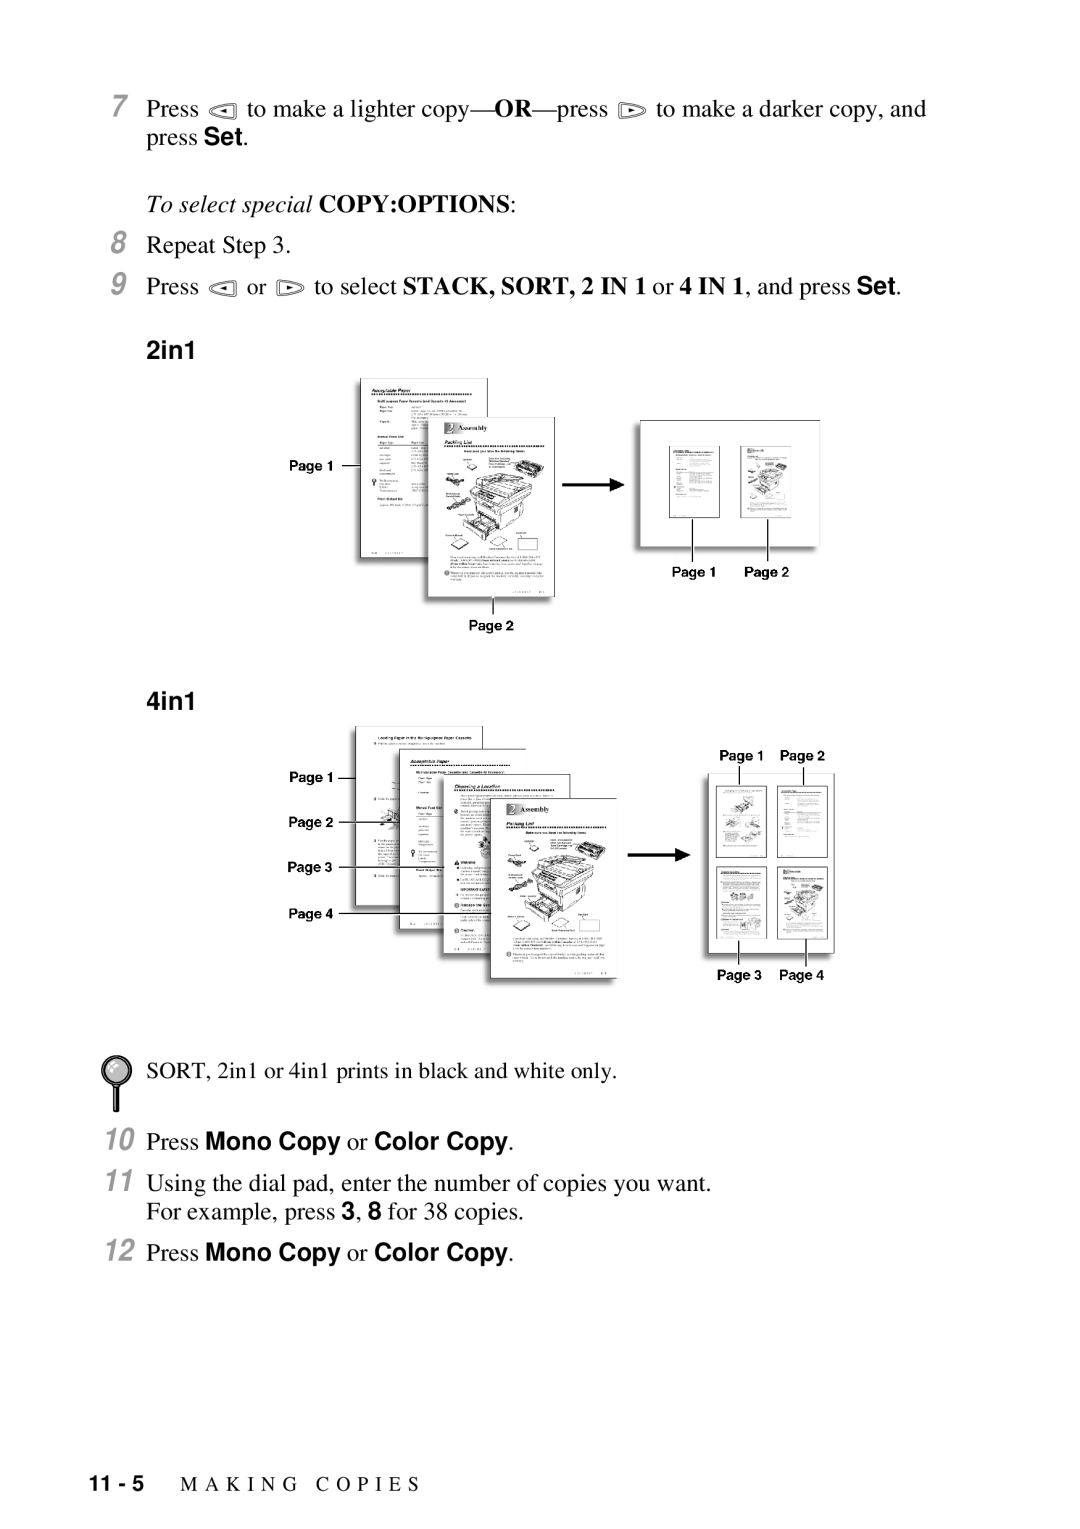 Brother MFC-7300C manual 2in1 4in1, Press Mono Copy or Color Copy 